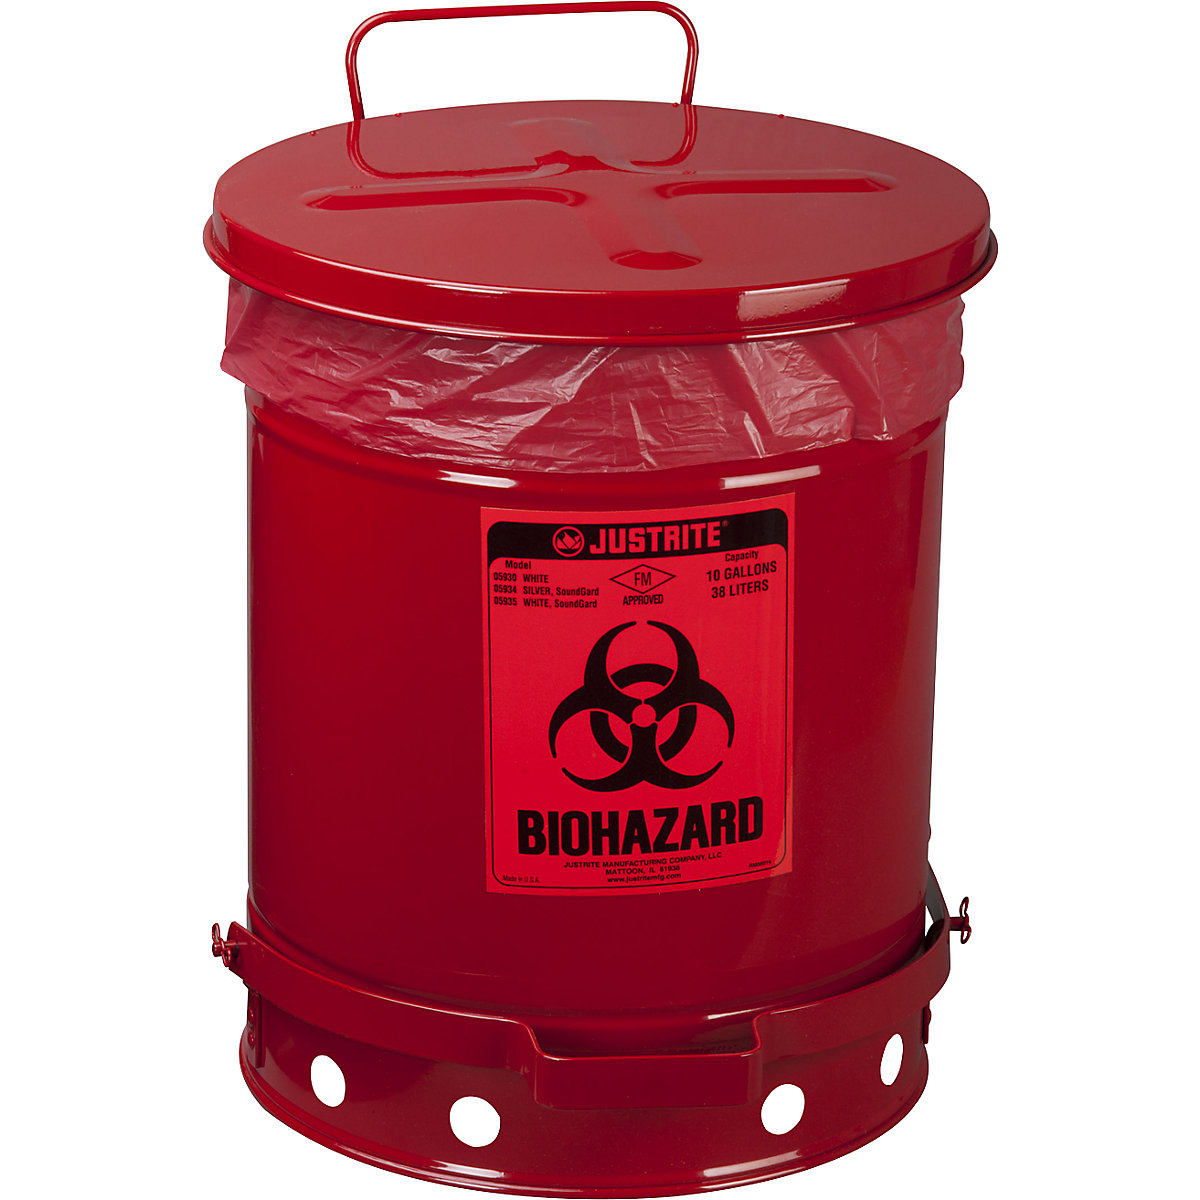 Sheet steel safety disposal can for biohazardous waste – Justrite